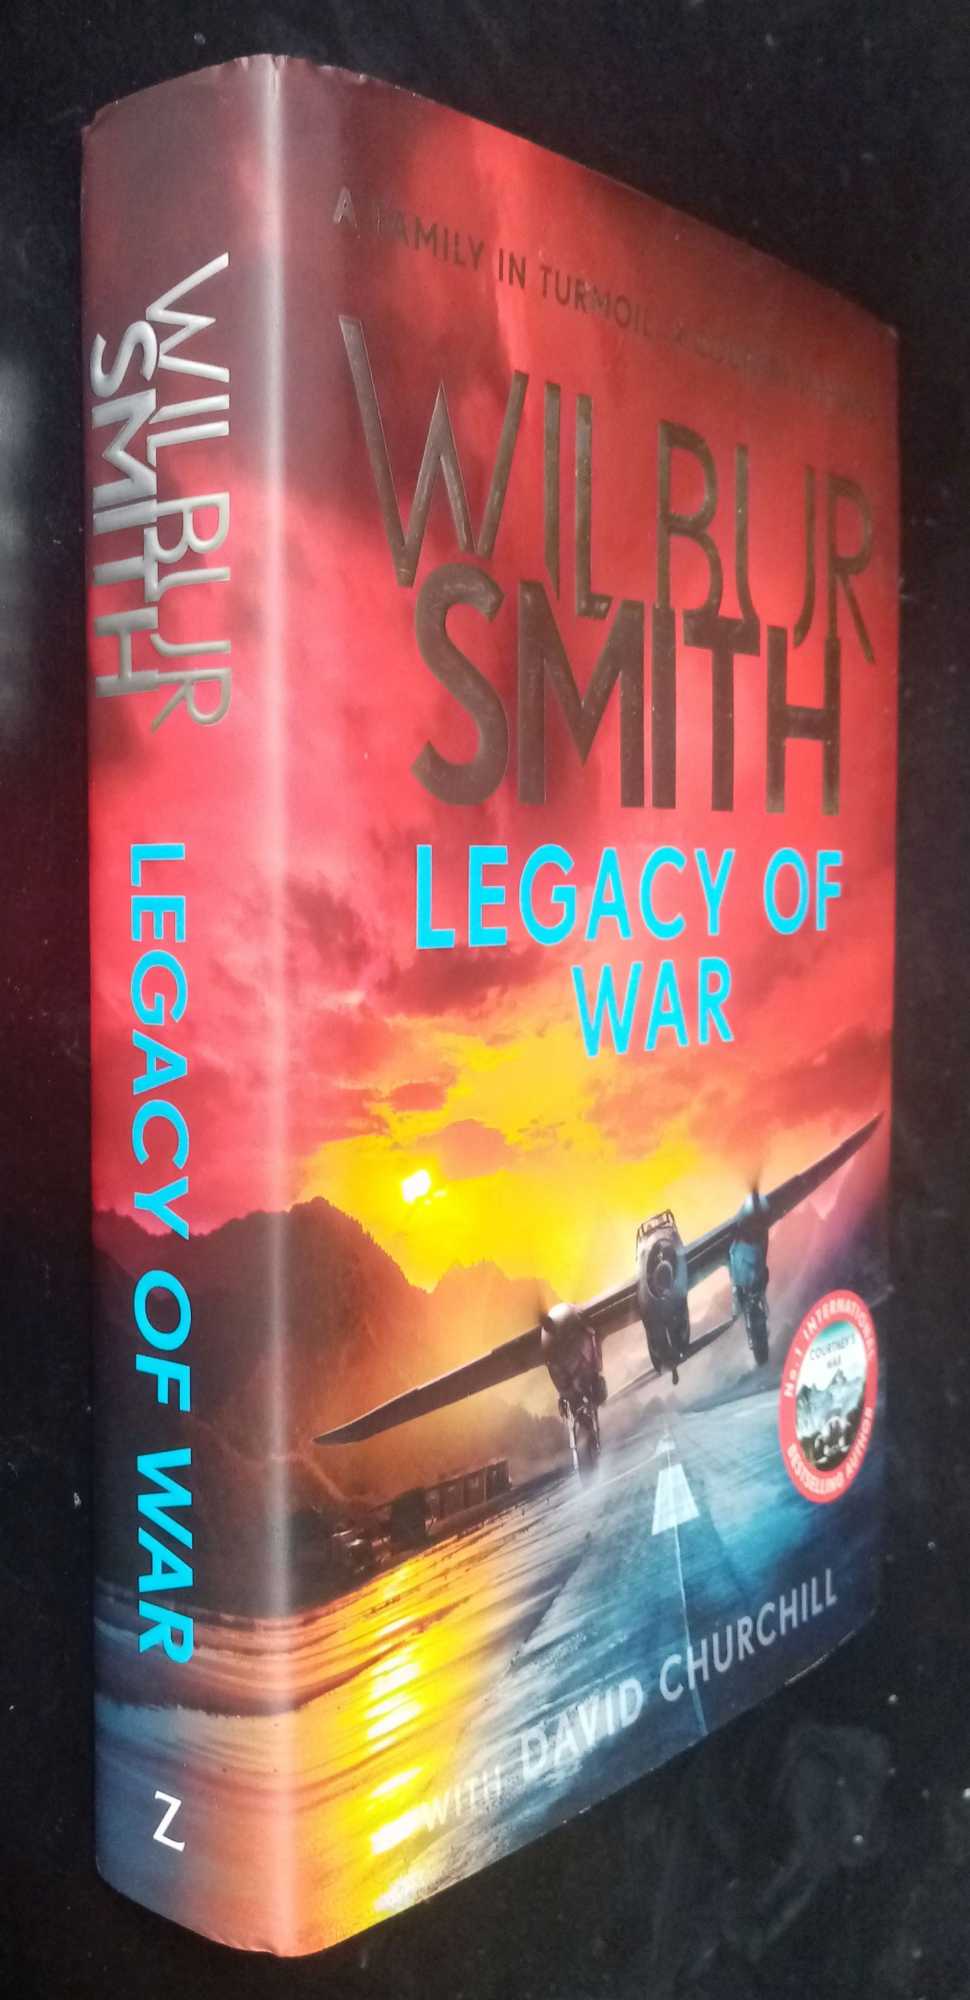 Wilbur Smith - Legacy of War